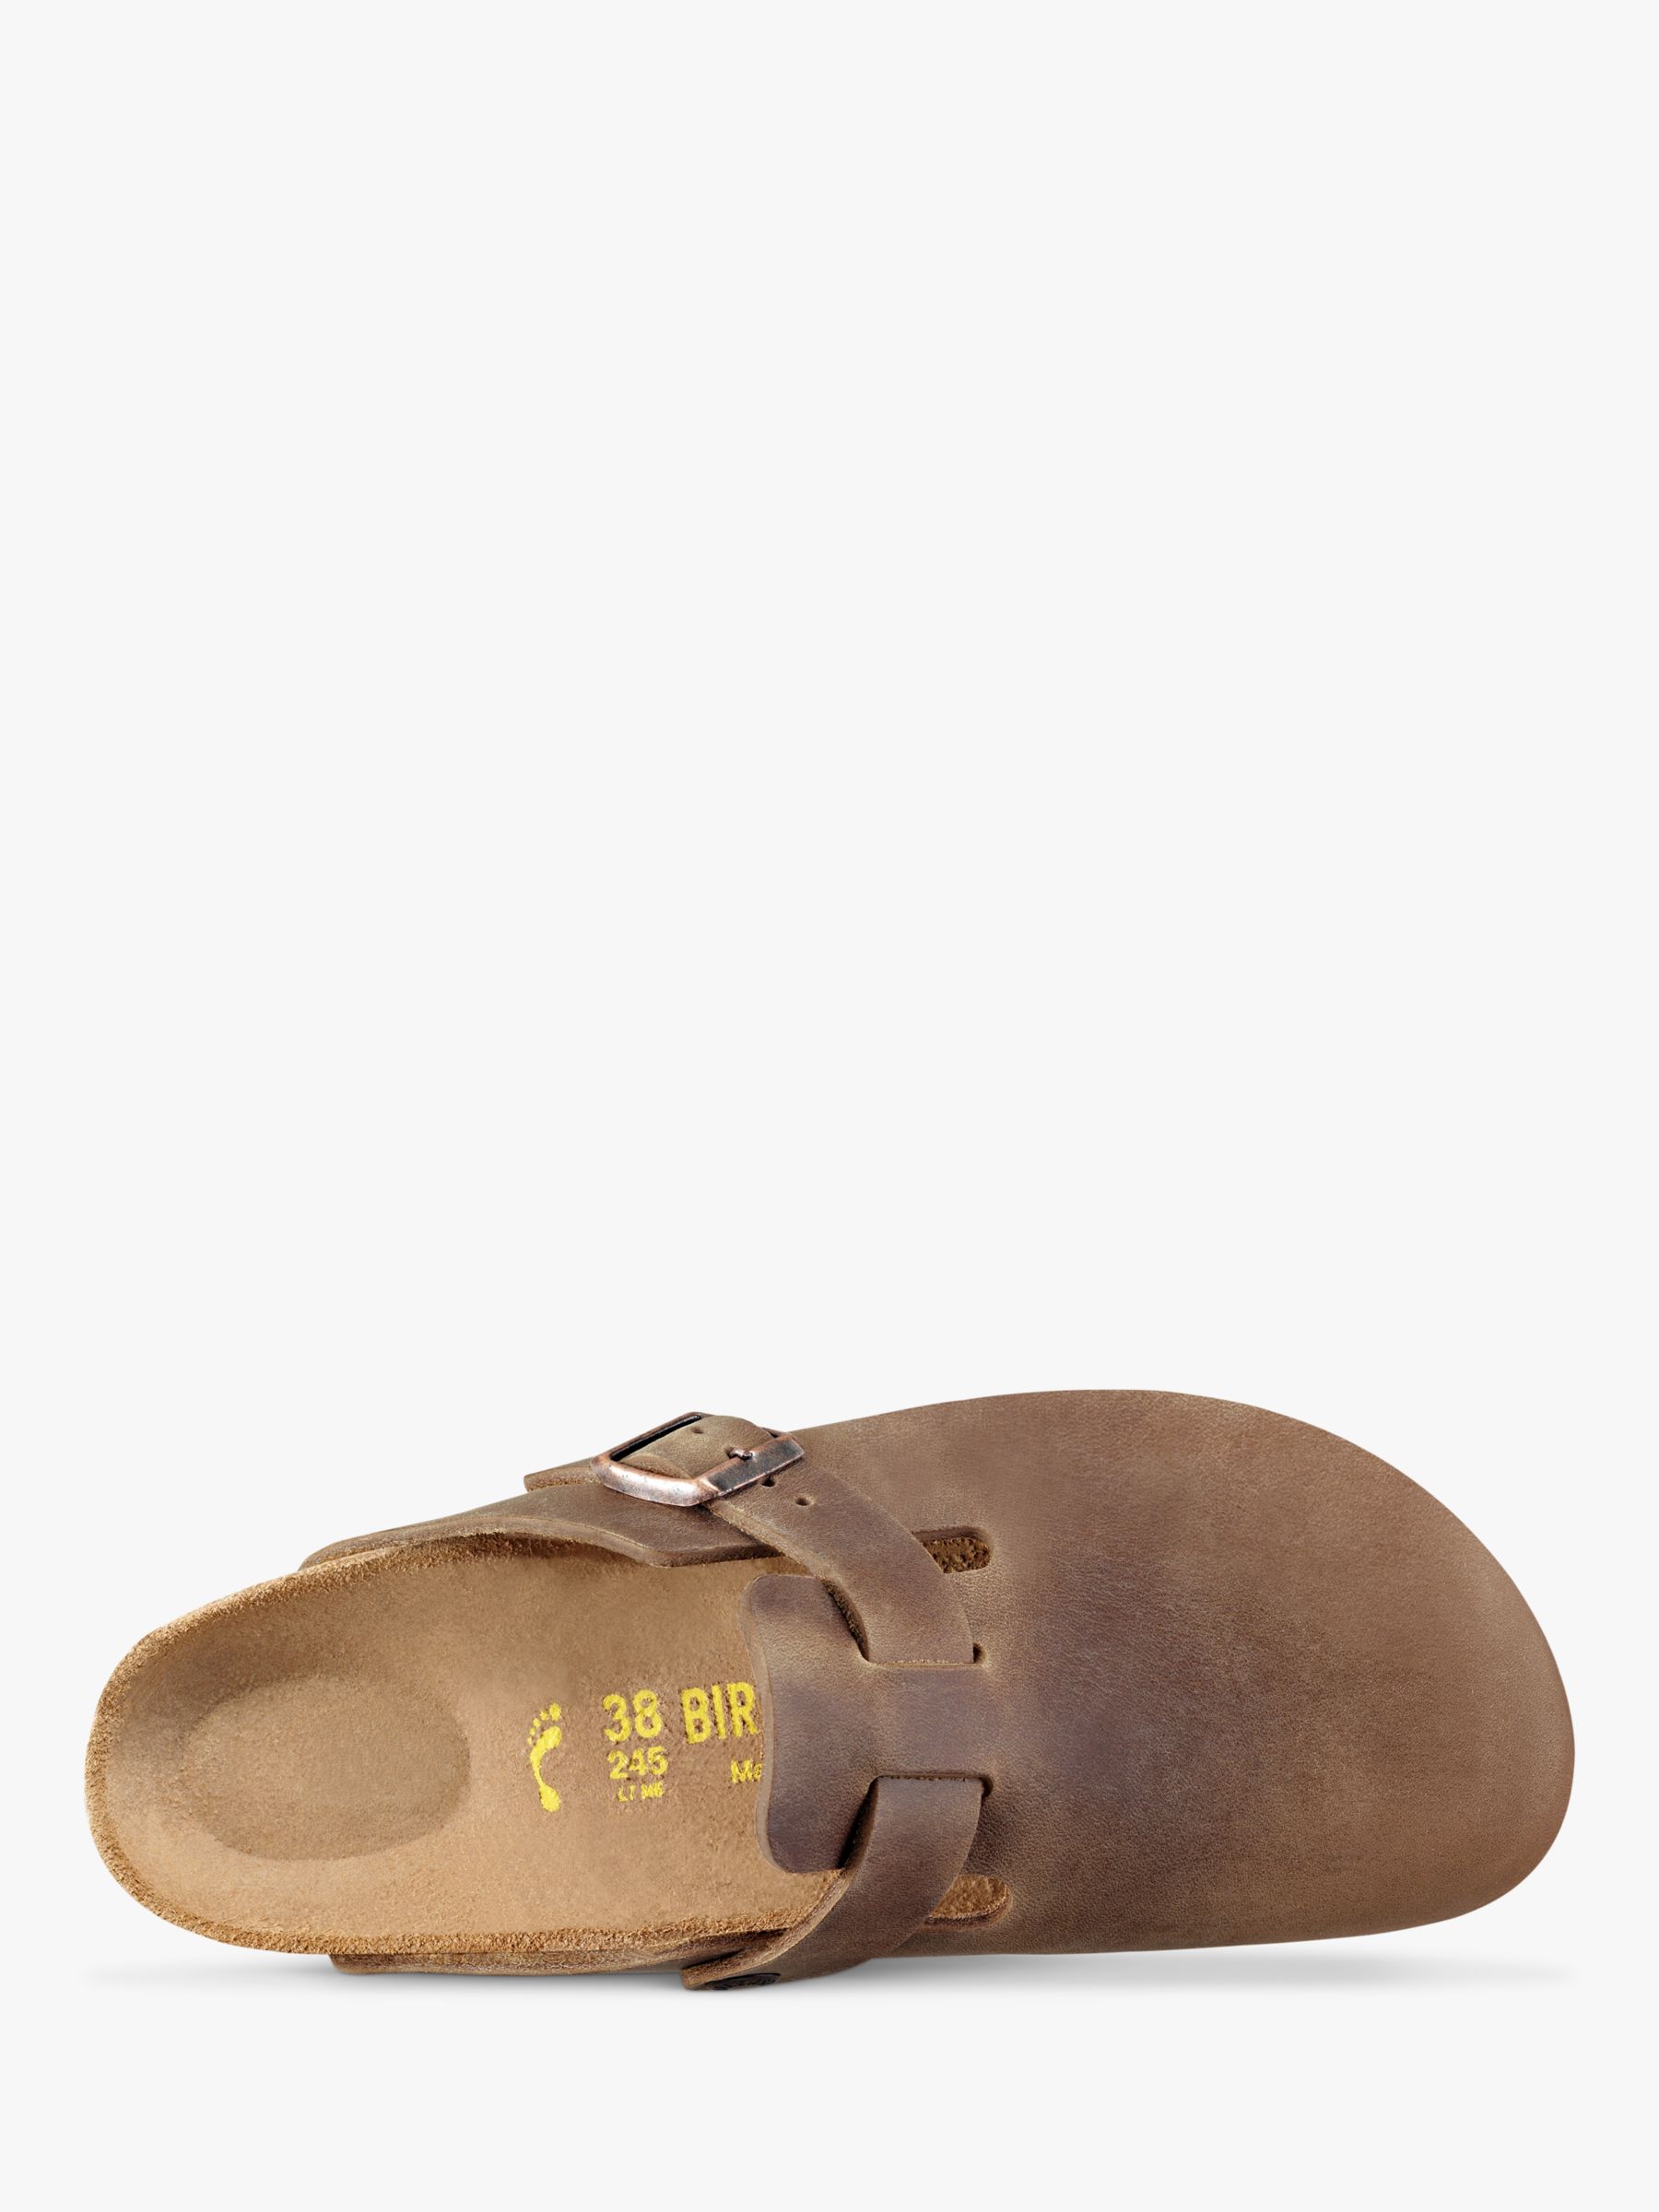 Birkenstock Boston Oiled Nubuck Sandals, Tabacco Brown, 41